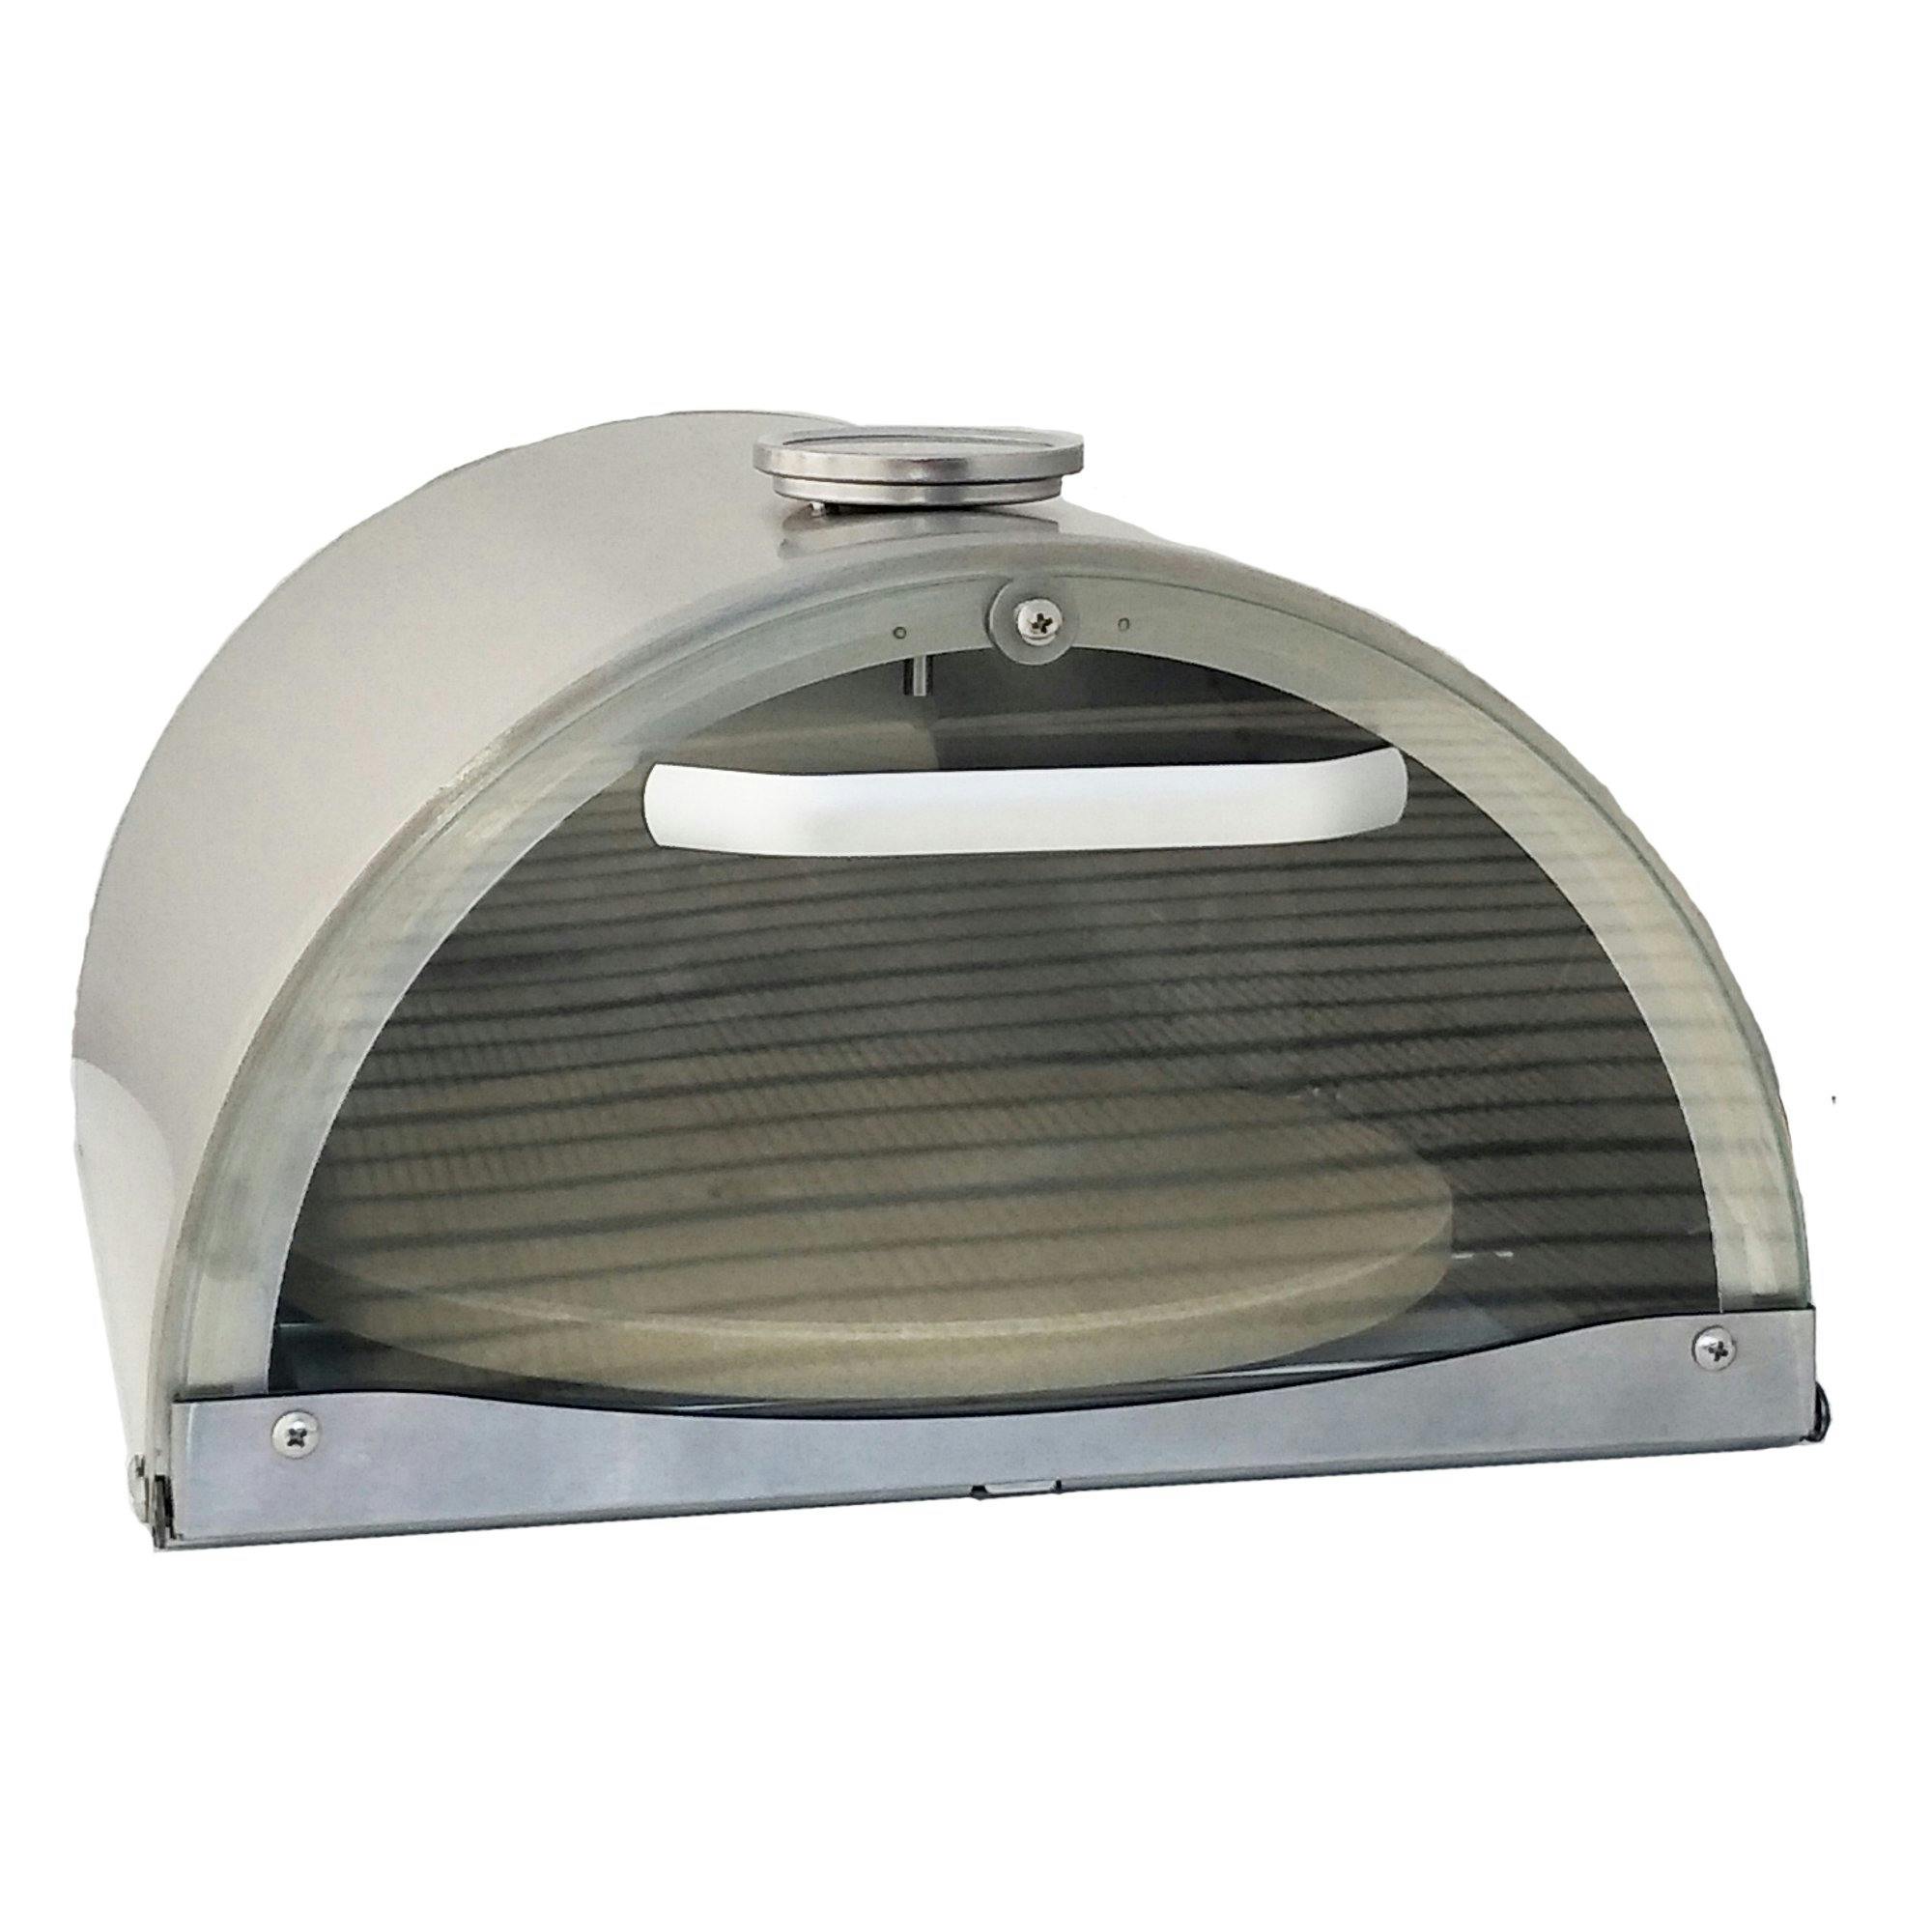 Mont Alpi Pizza Oven Attachment for Side Burners